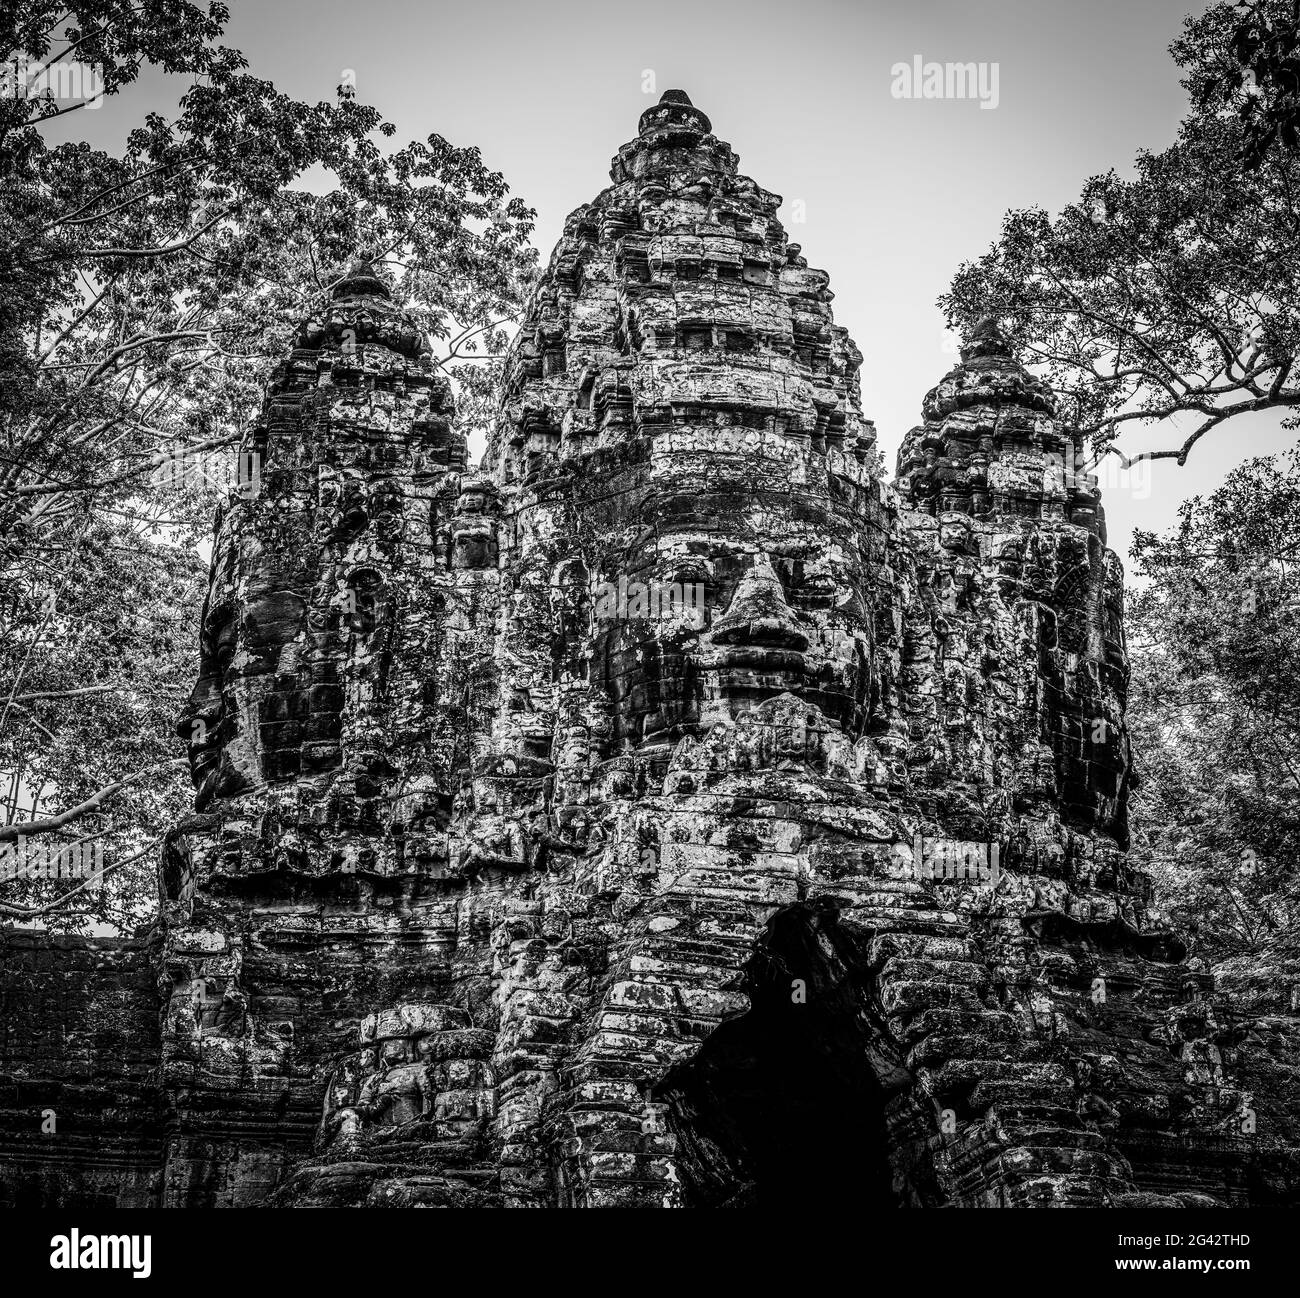 Porta Nord di Angkor Thom Tempio rovina in bianco e nero, Angkor Wat Parco Archeologico, Siem Reap, Cambogia Foto Stock